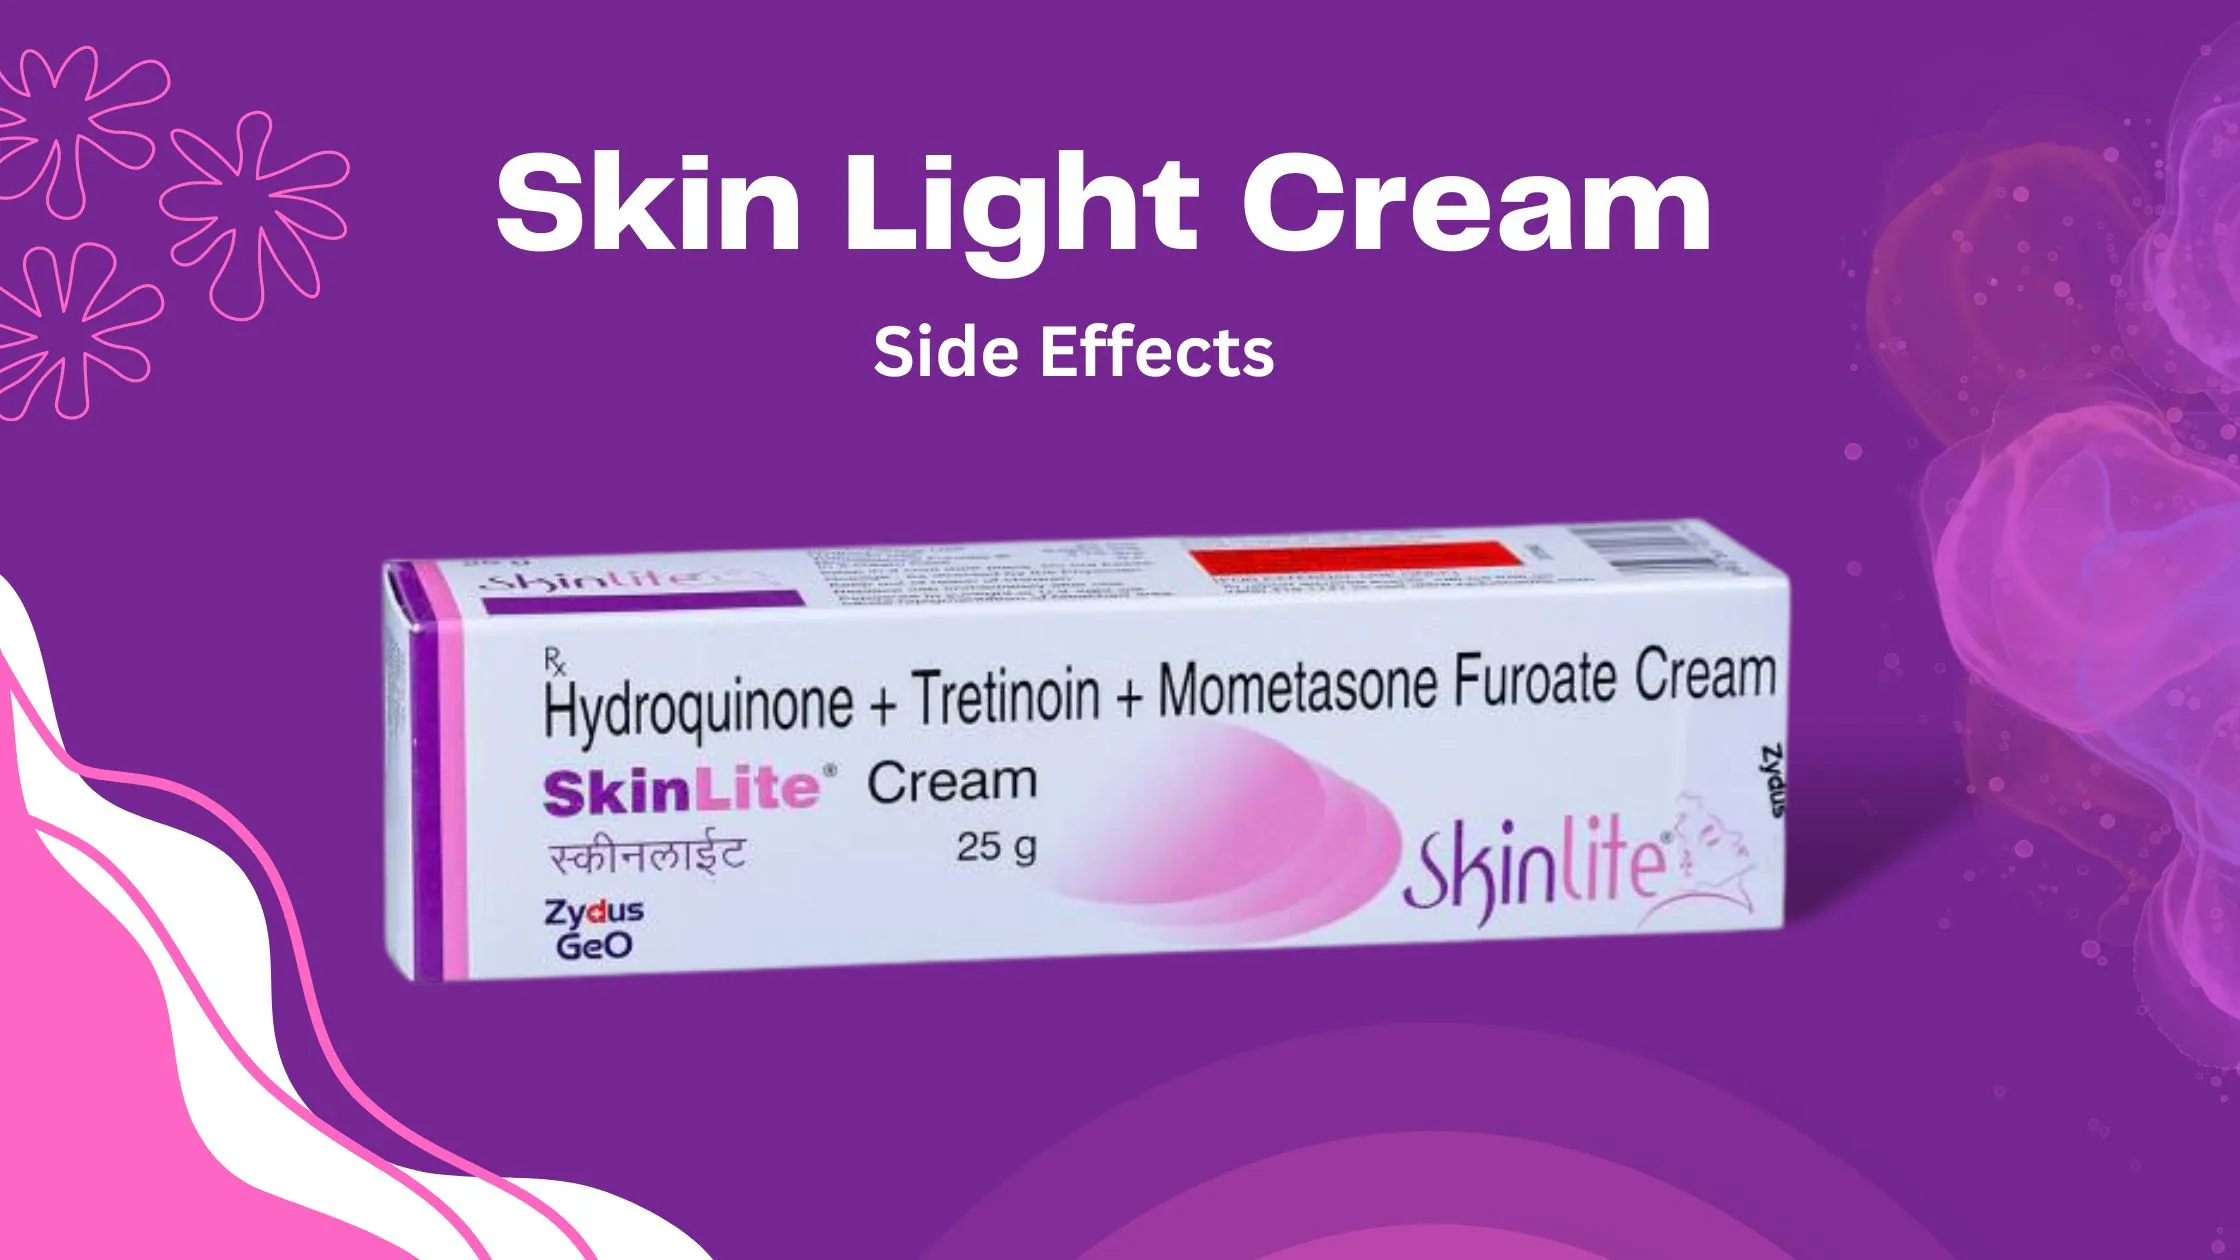 Skin Light Cream Side Effects